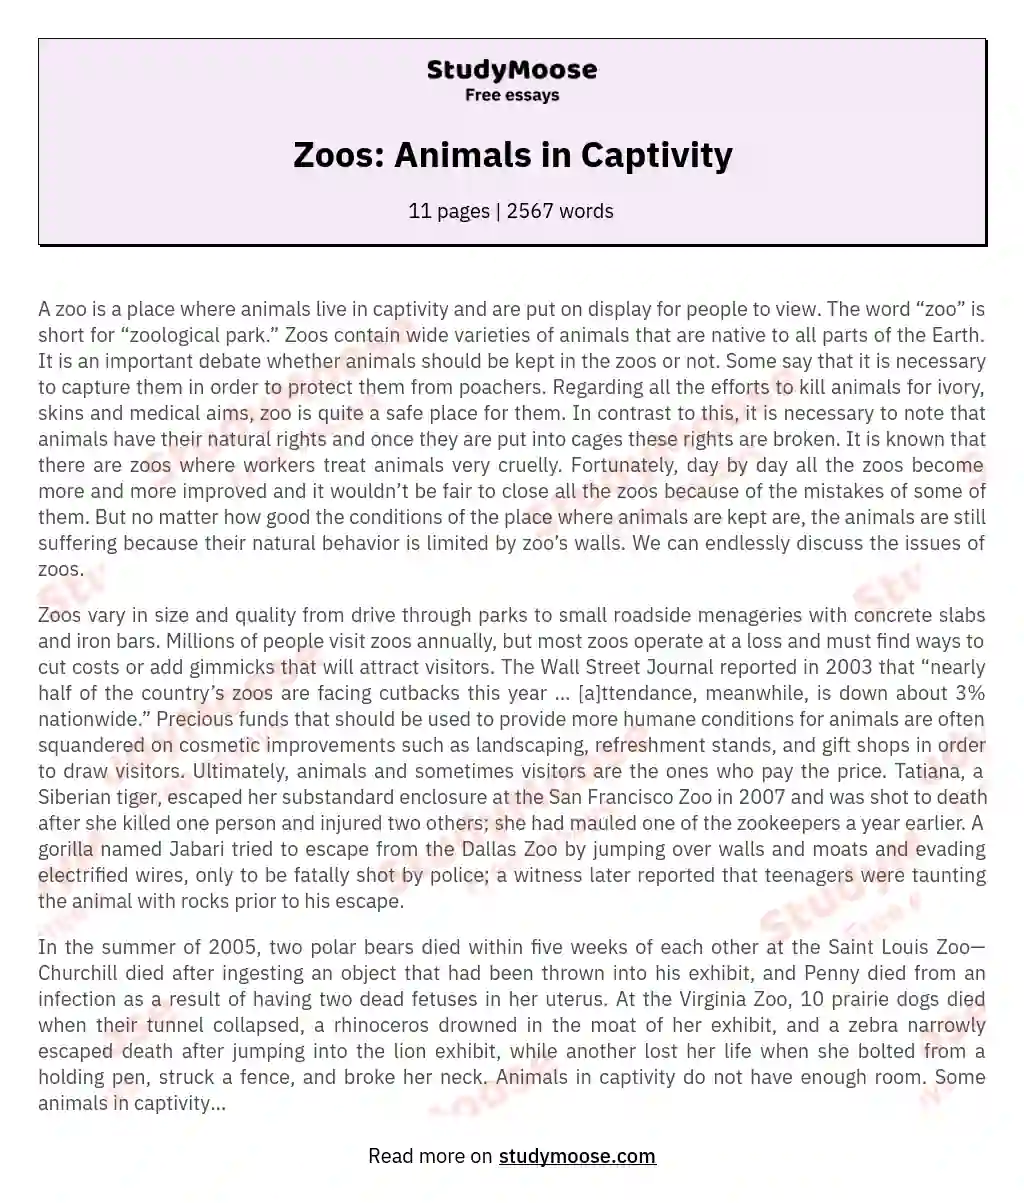 Zoos: Animals in Captivity